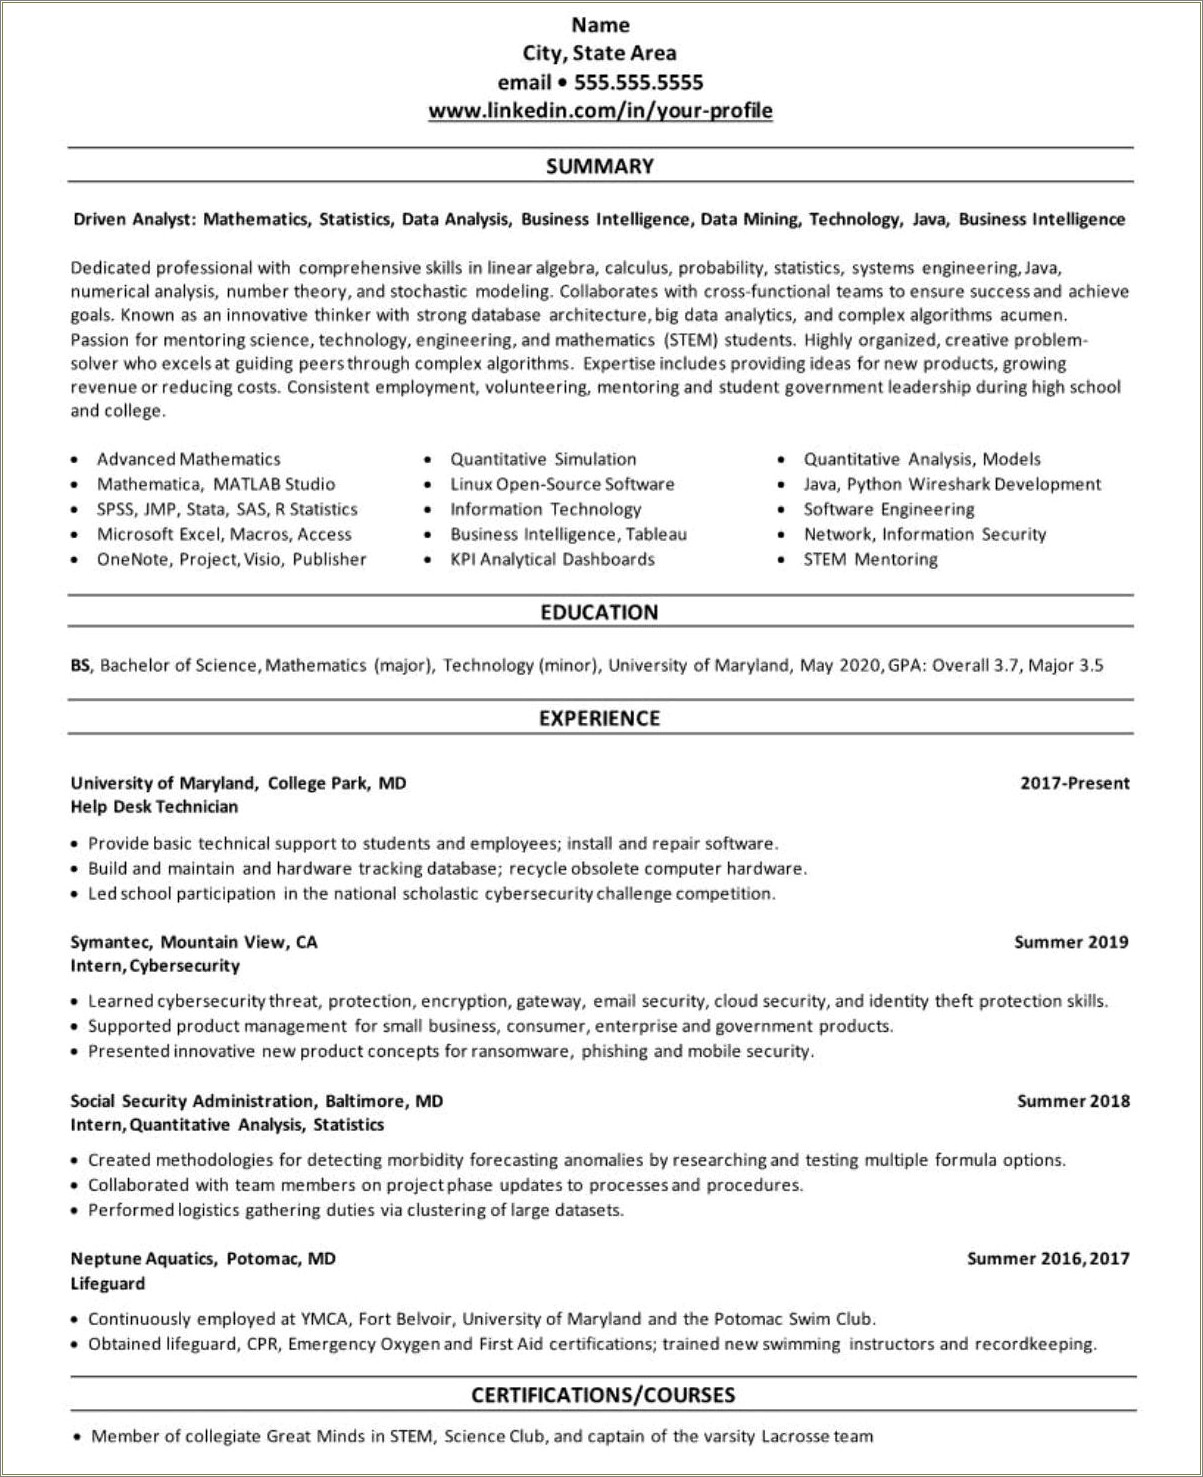 ucla career center resume help